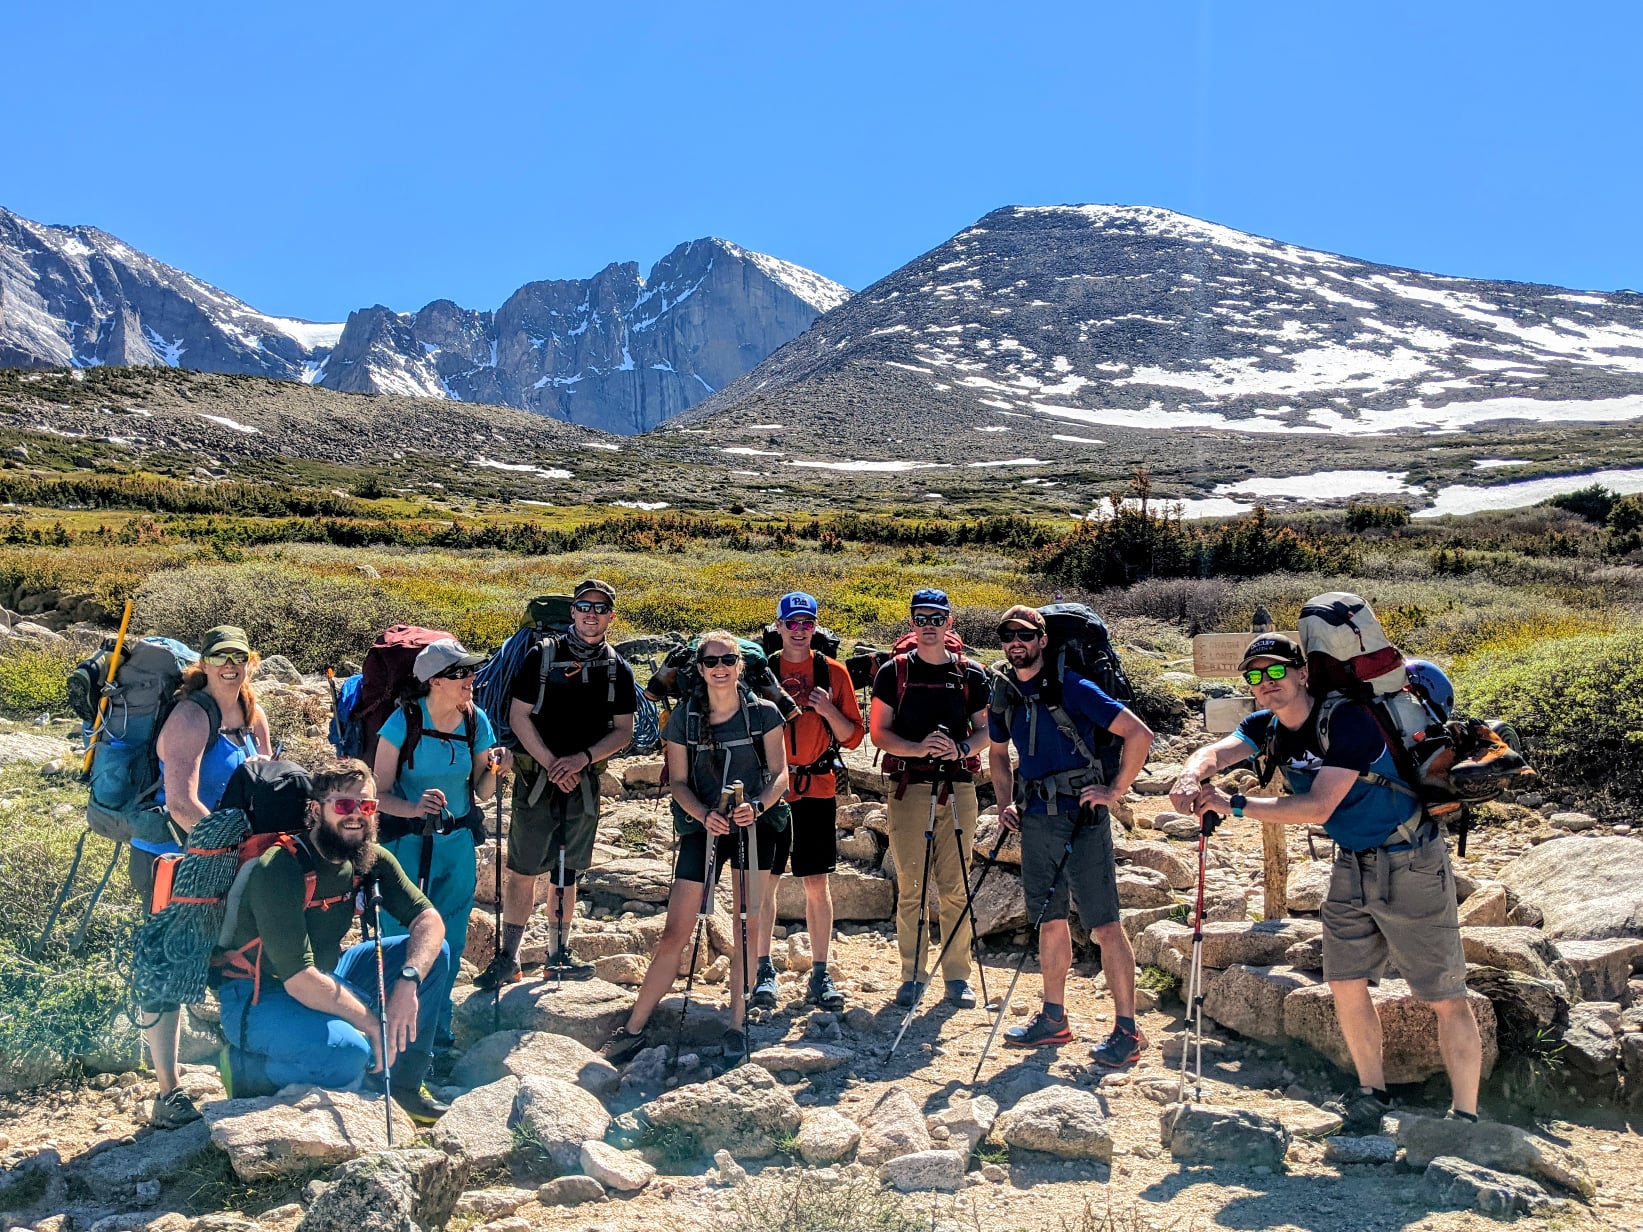 The Art & Science of Planning Alpine Climbing School Trips